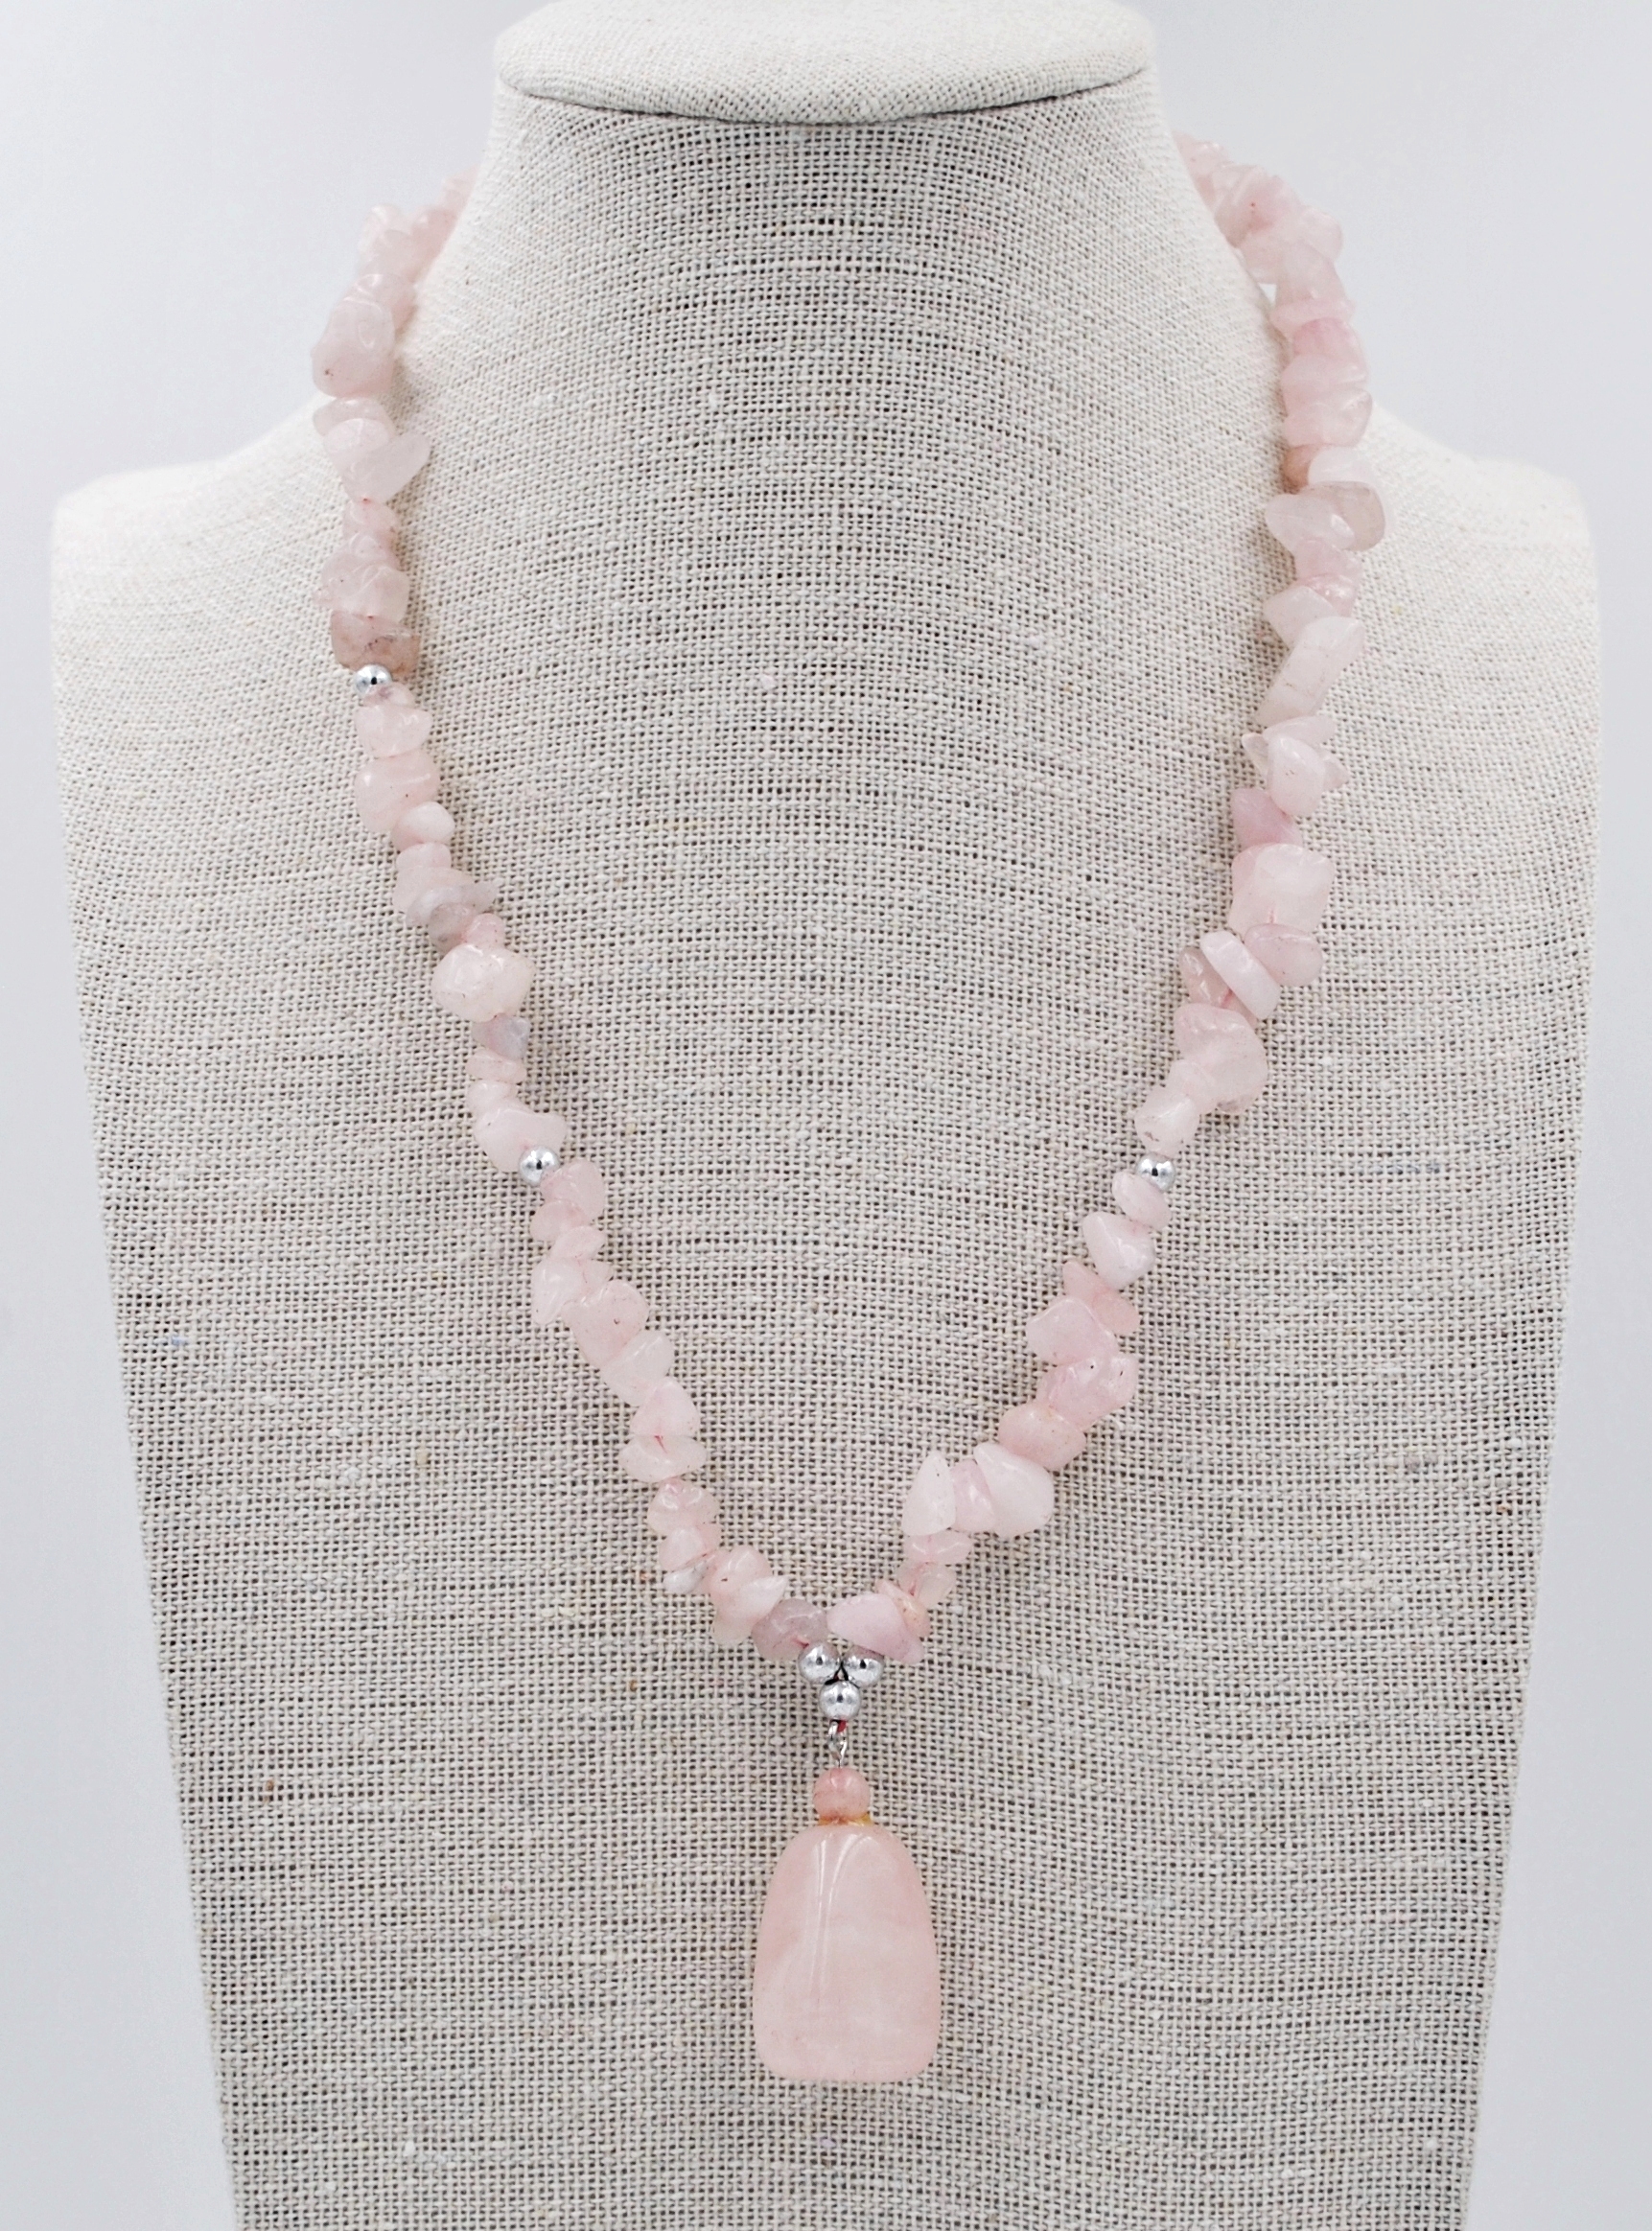 Dozen (12 Pc.) 18" Rose Quartz Chip Stone Necklace With Nugget Pendant #CN83RQ